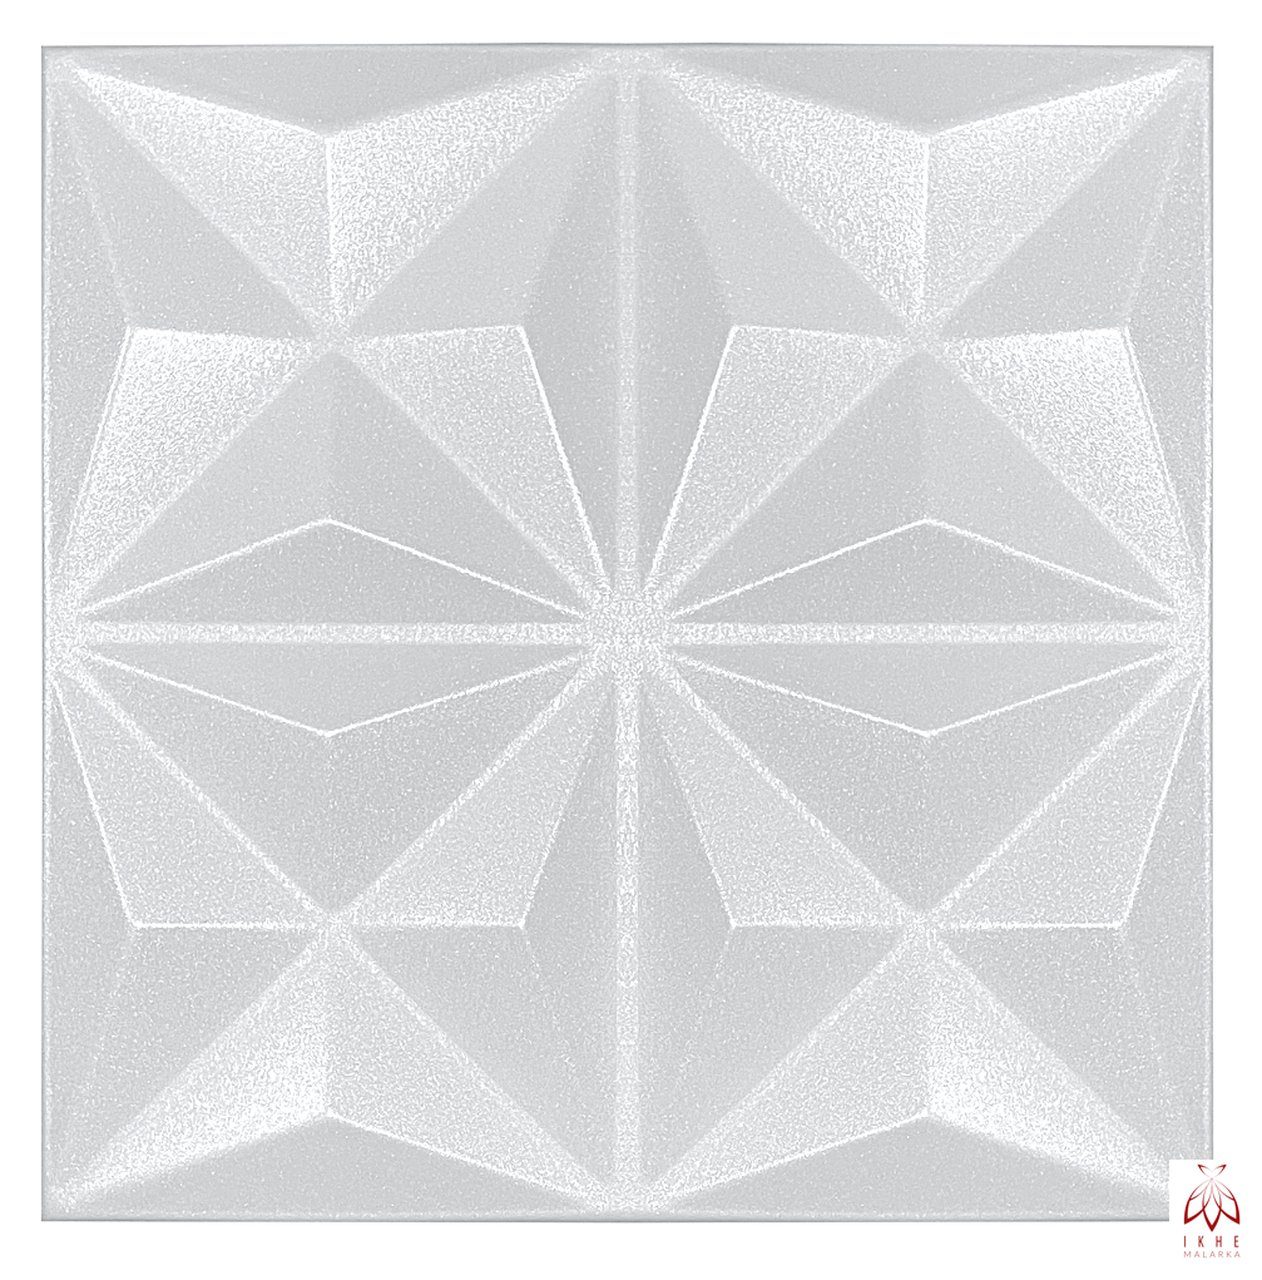 IKHEMalarka 3D Wandpaneel Polystyrol 3D Paneele Deckenpaneele 2-18 Quadratmeter, BxL: 50,00x50,00 cm, 0,25 qm, (24-tlg) Dekoren, Decken Wandverkleidung